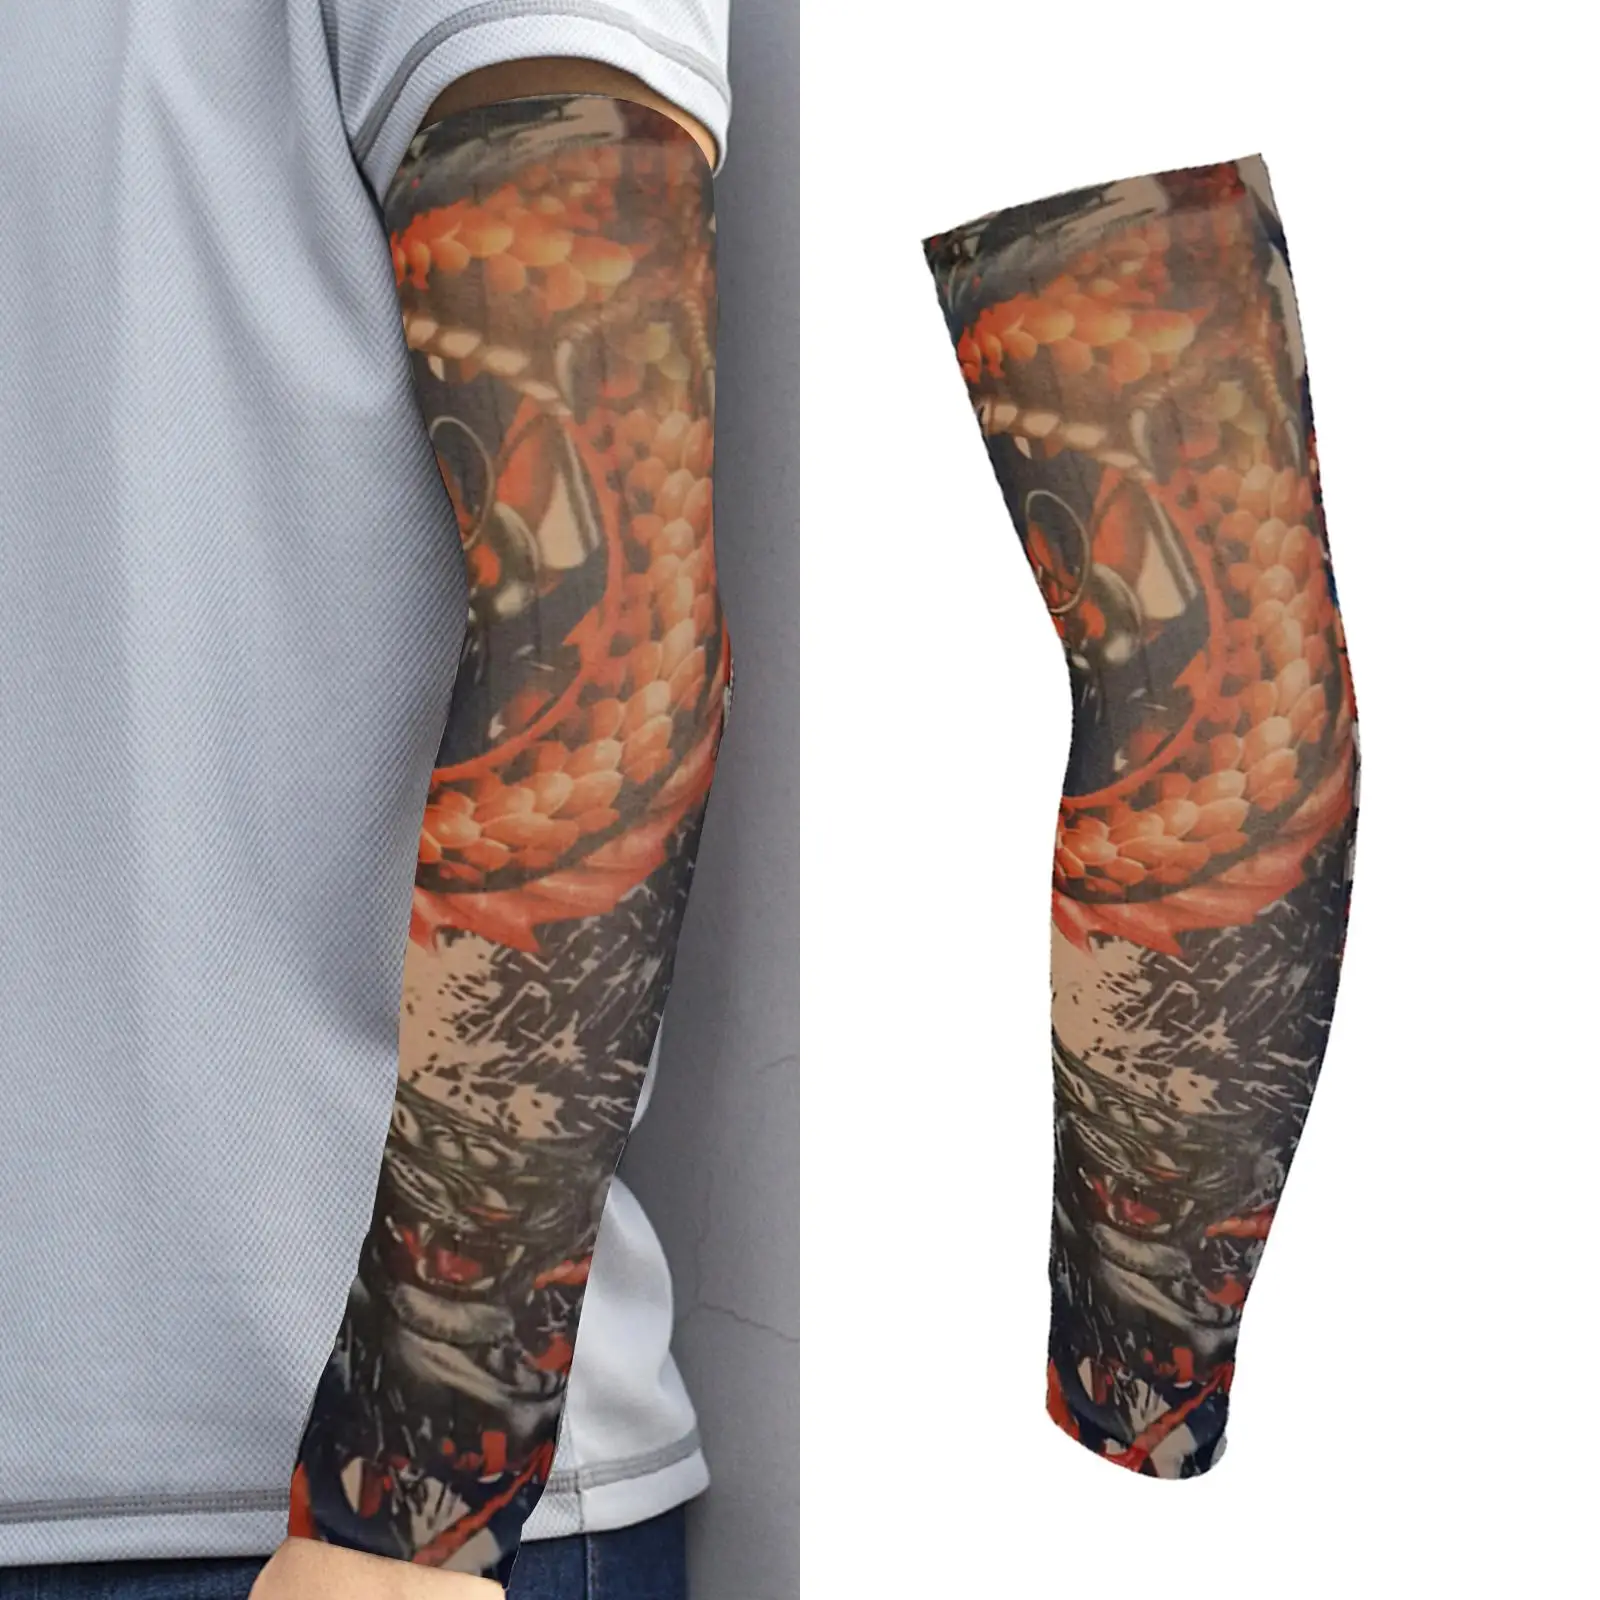 1x Arm Sleeves Sun UV Protection,Arm Cover , Seamless Art Arm Stockings Tattoo